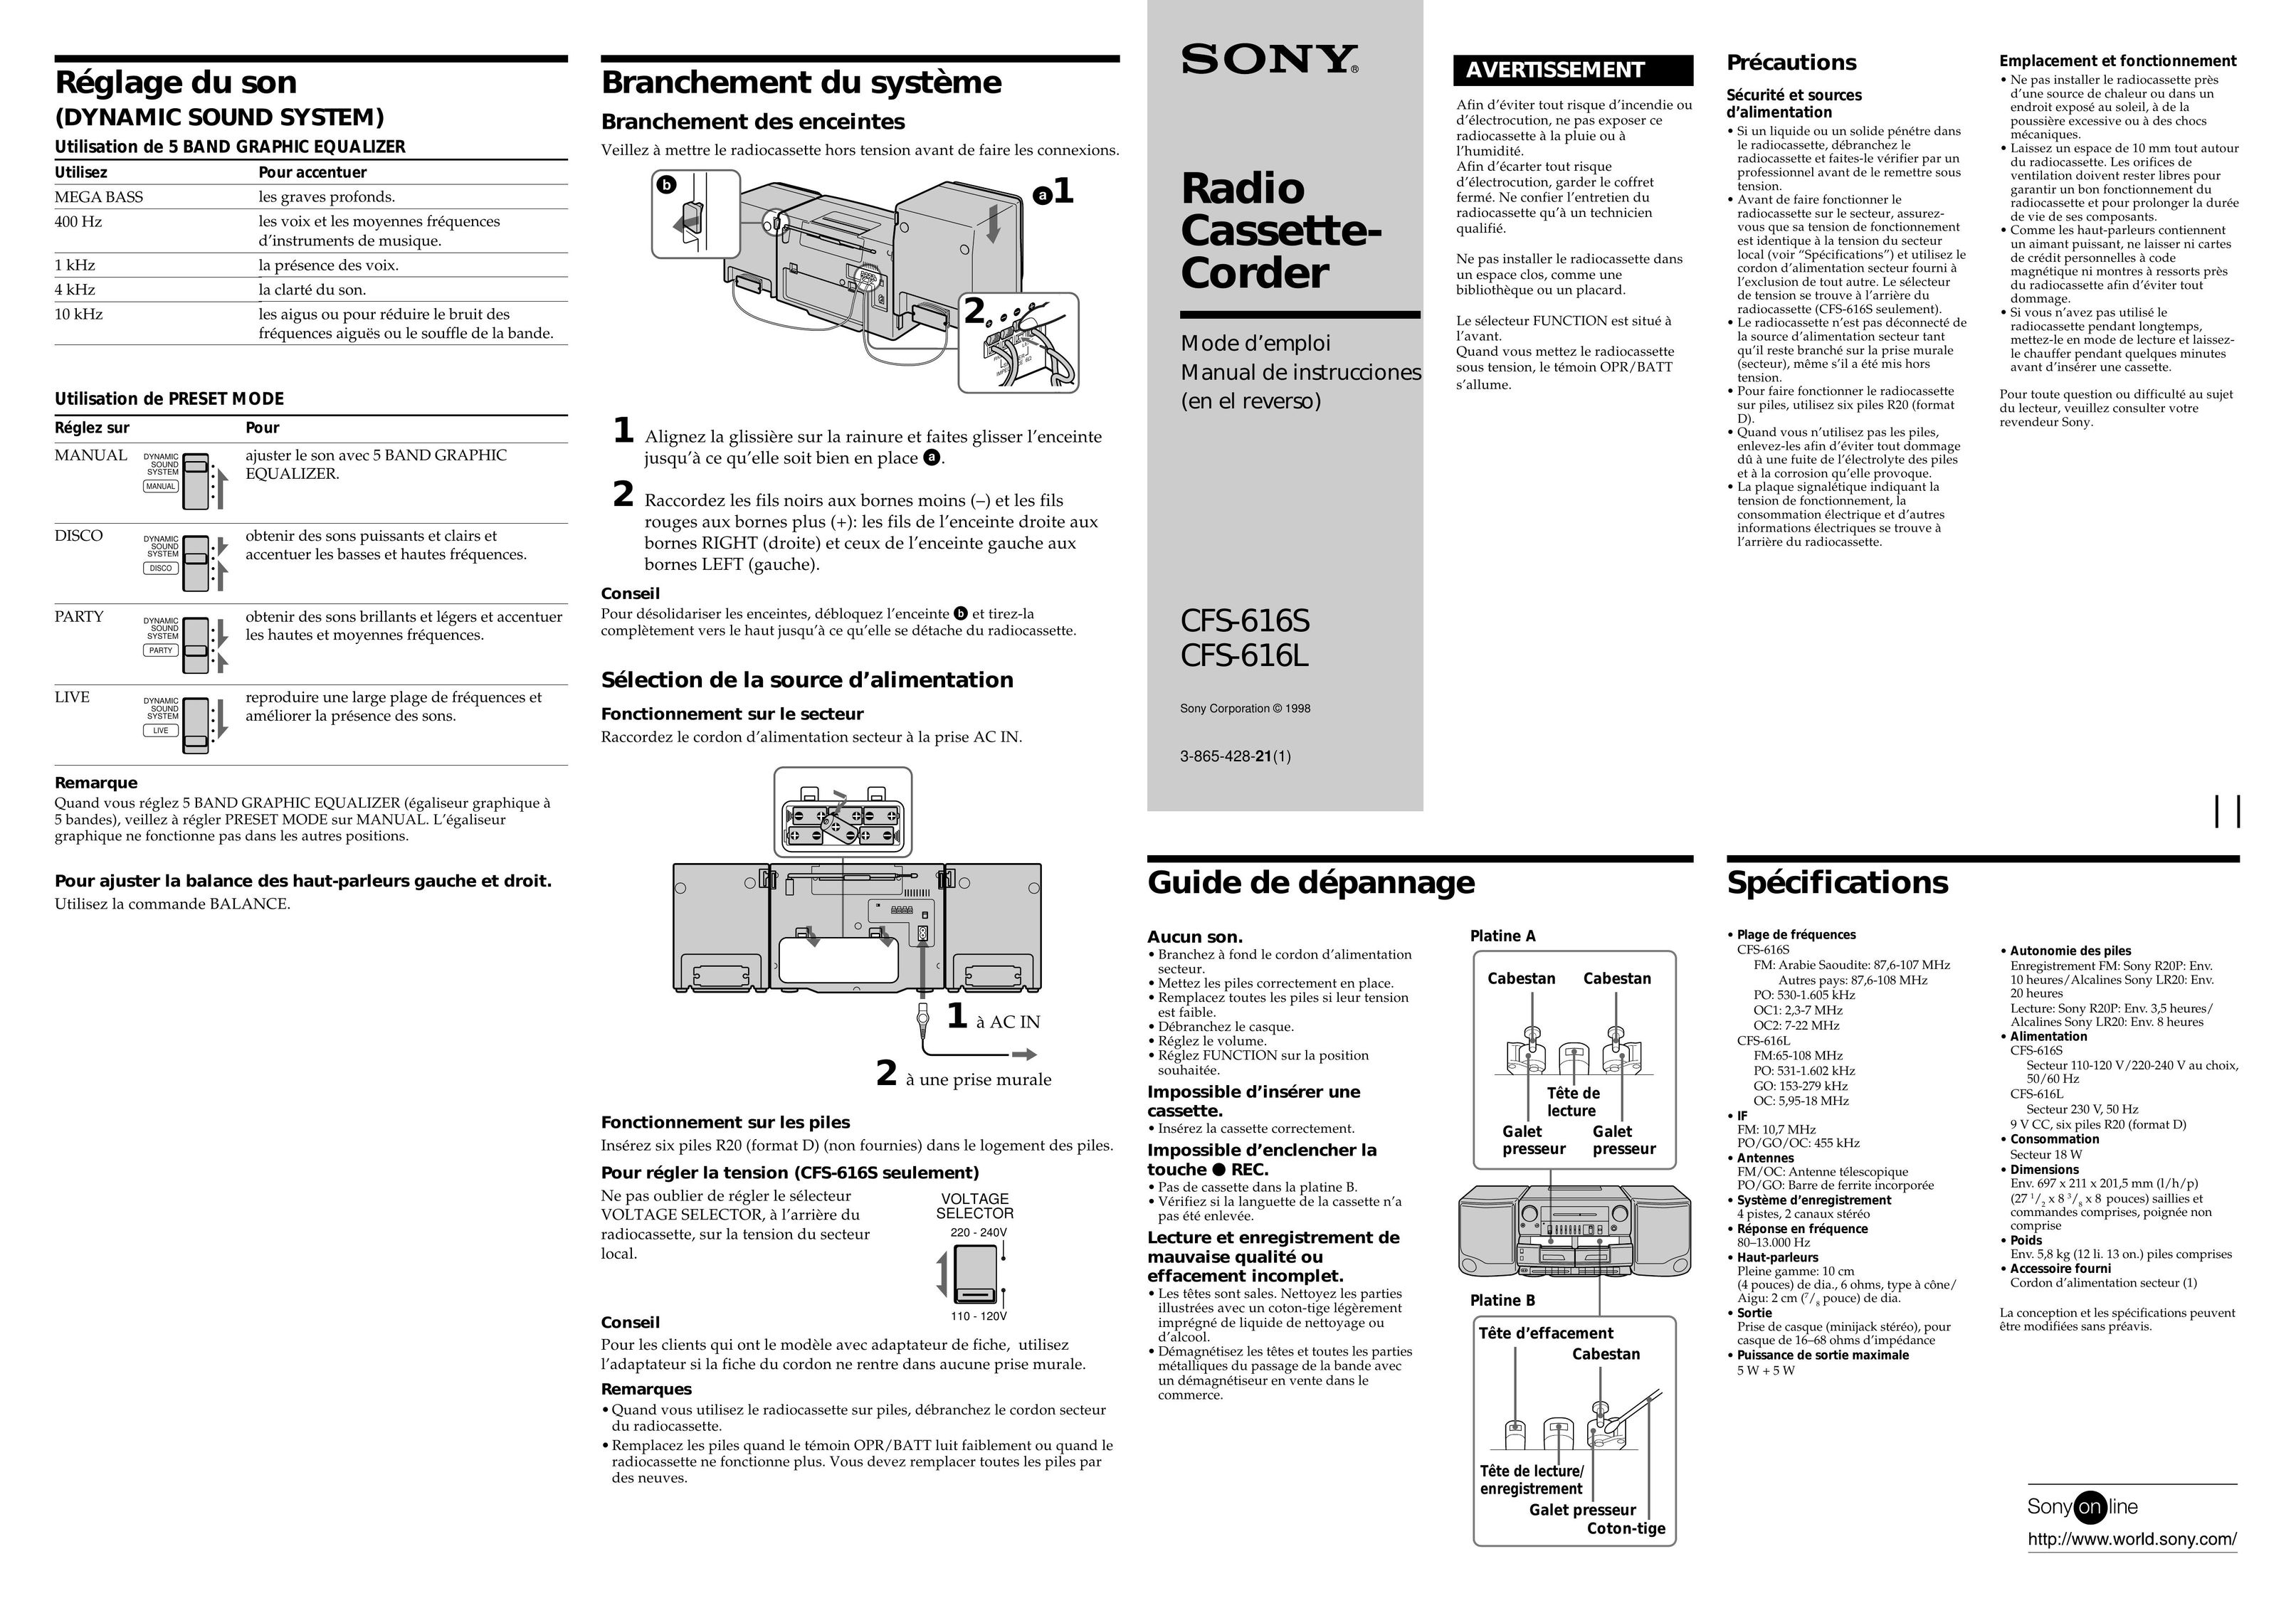 Sony CFS-616S Cassette Player User Manual